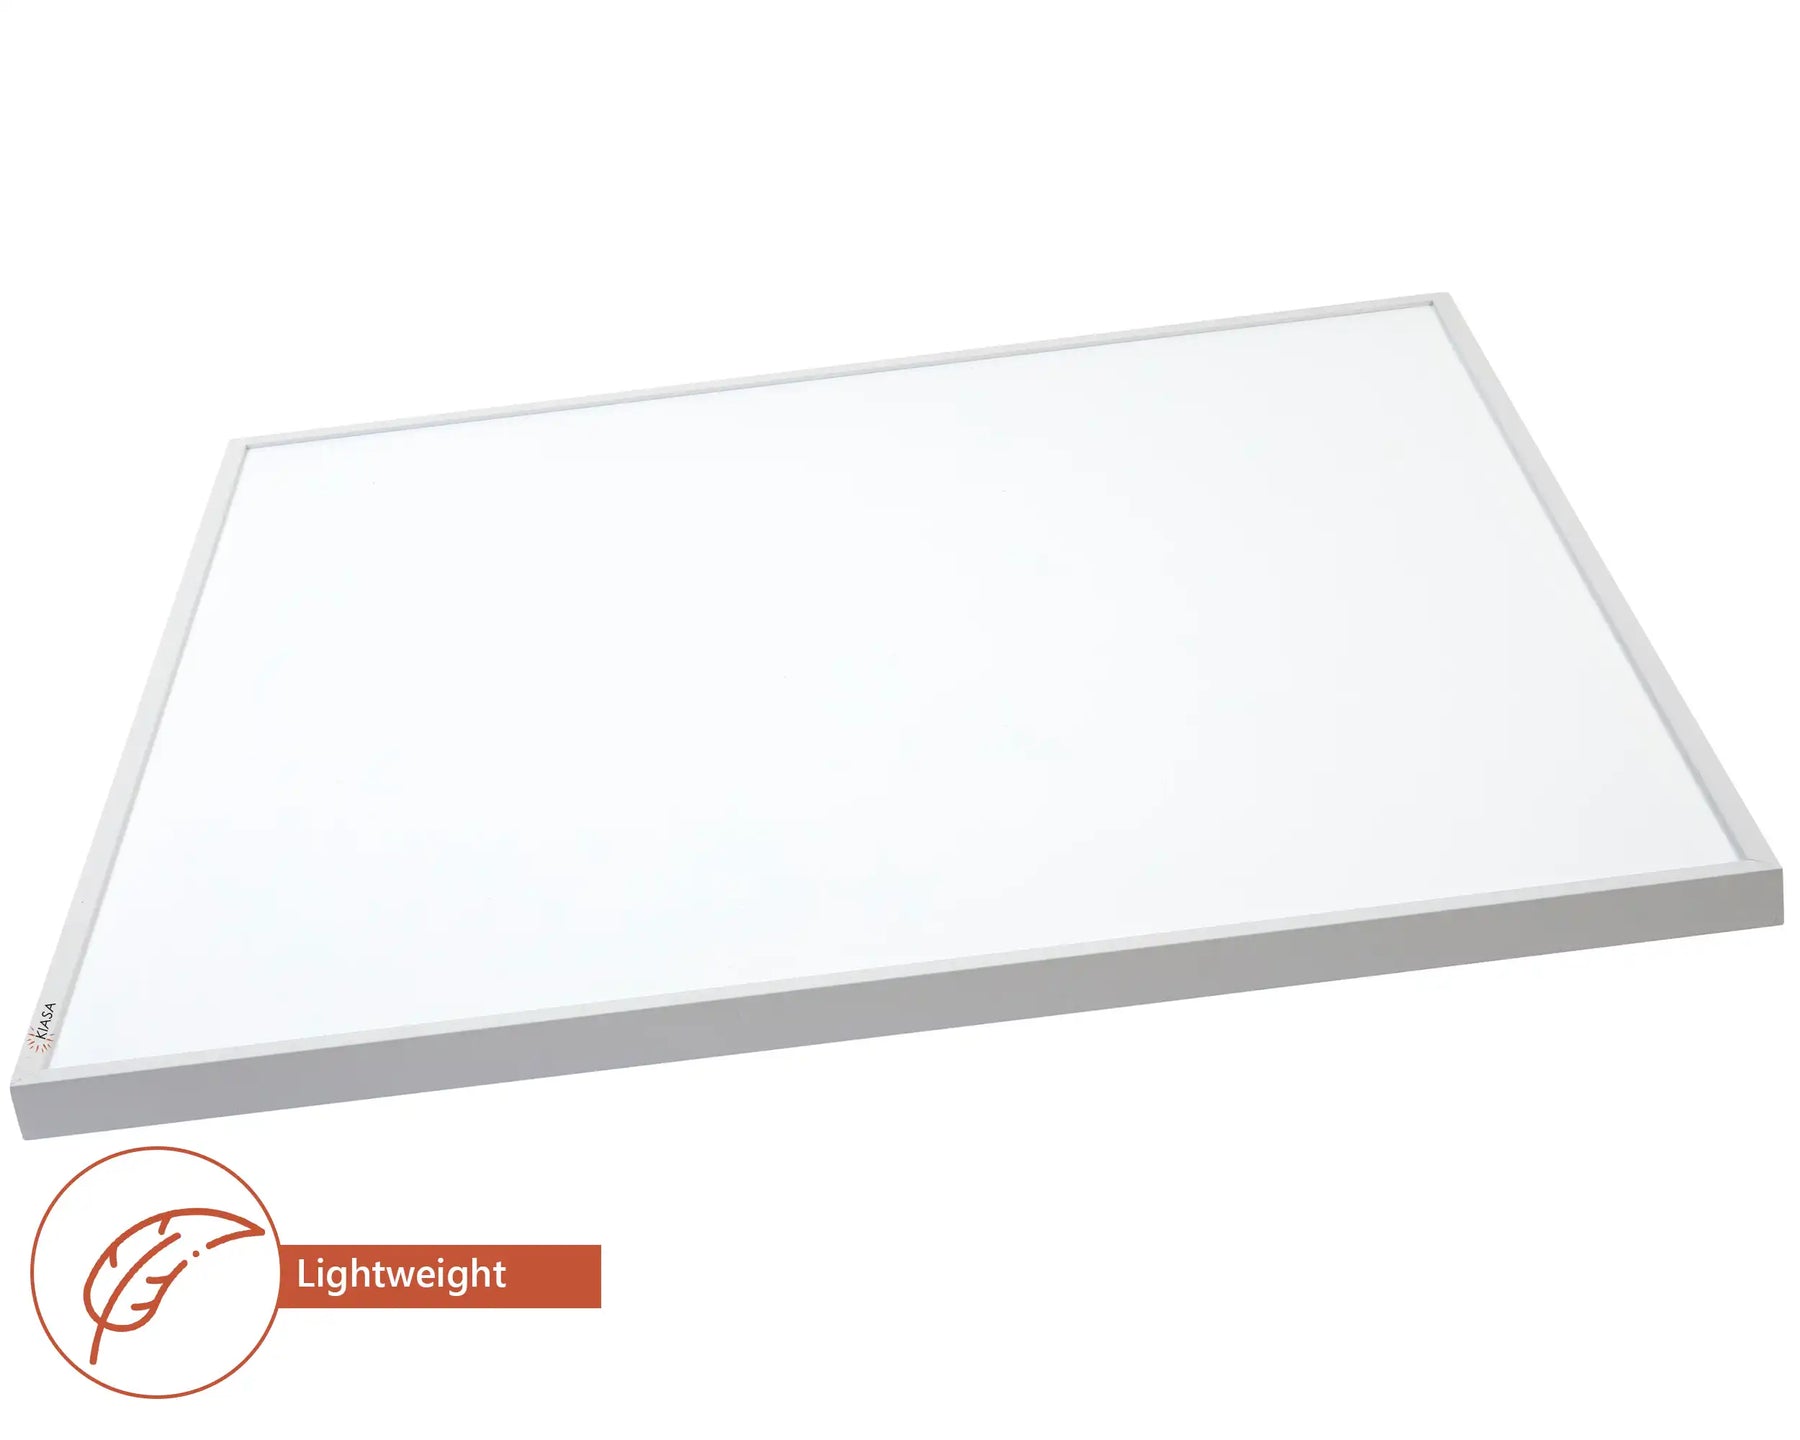 180W Infrared Heating Panel - 60cm x 30cm - Grade A